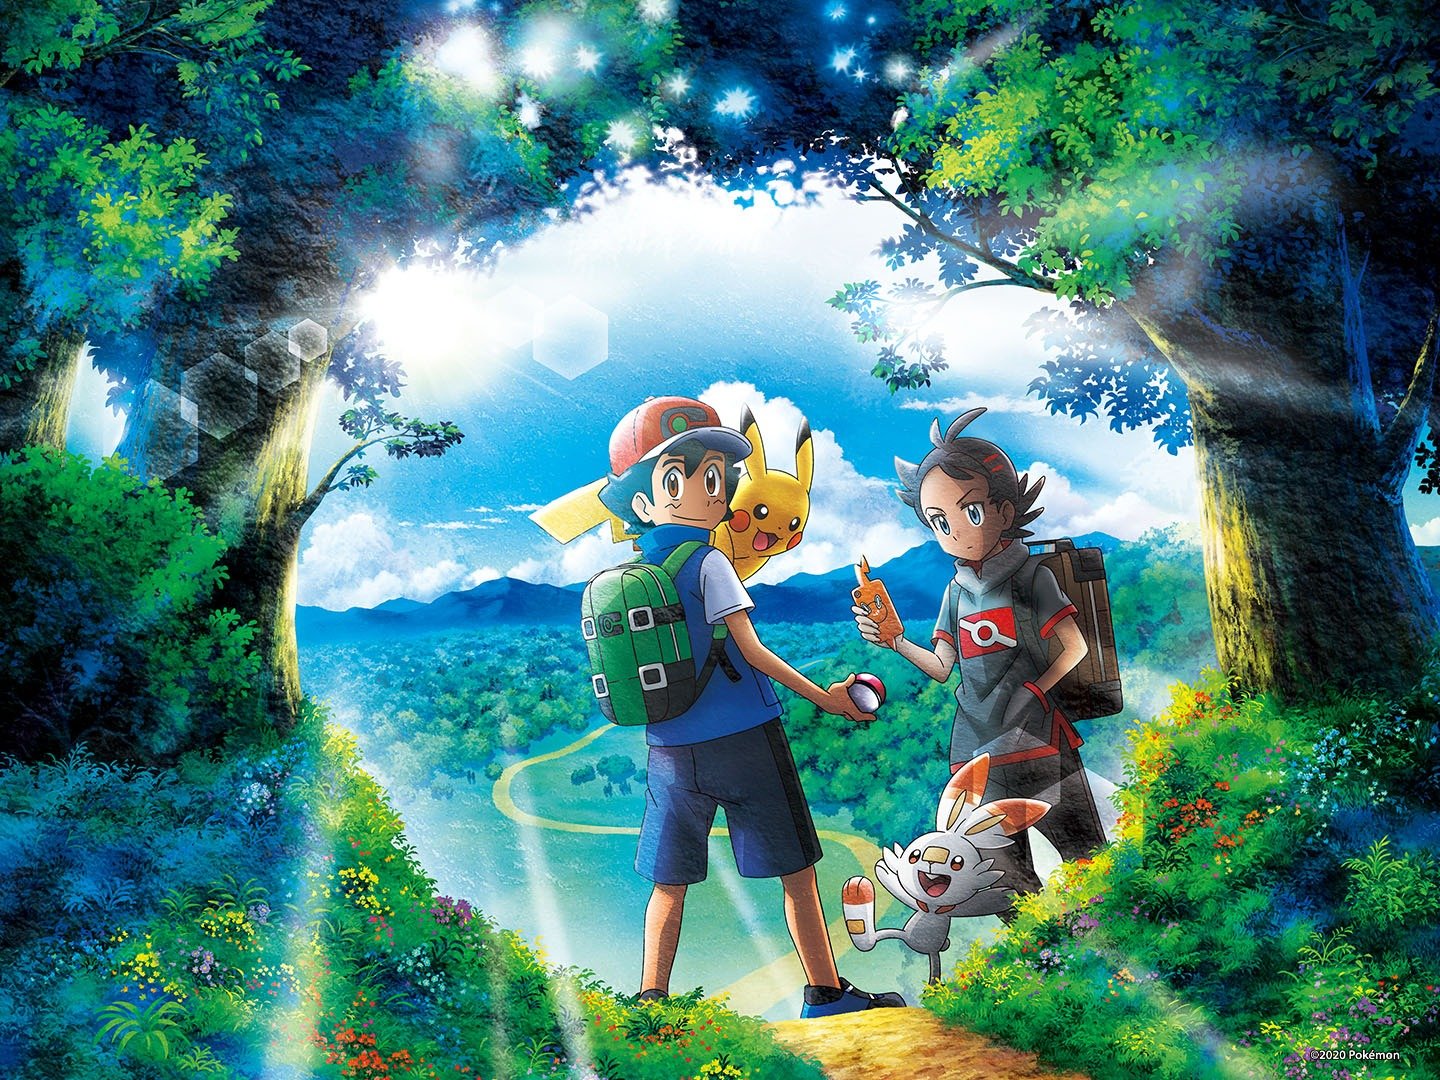 Pokémon: The Original Series (Anime) - TV Tropes